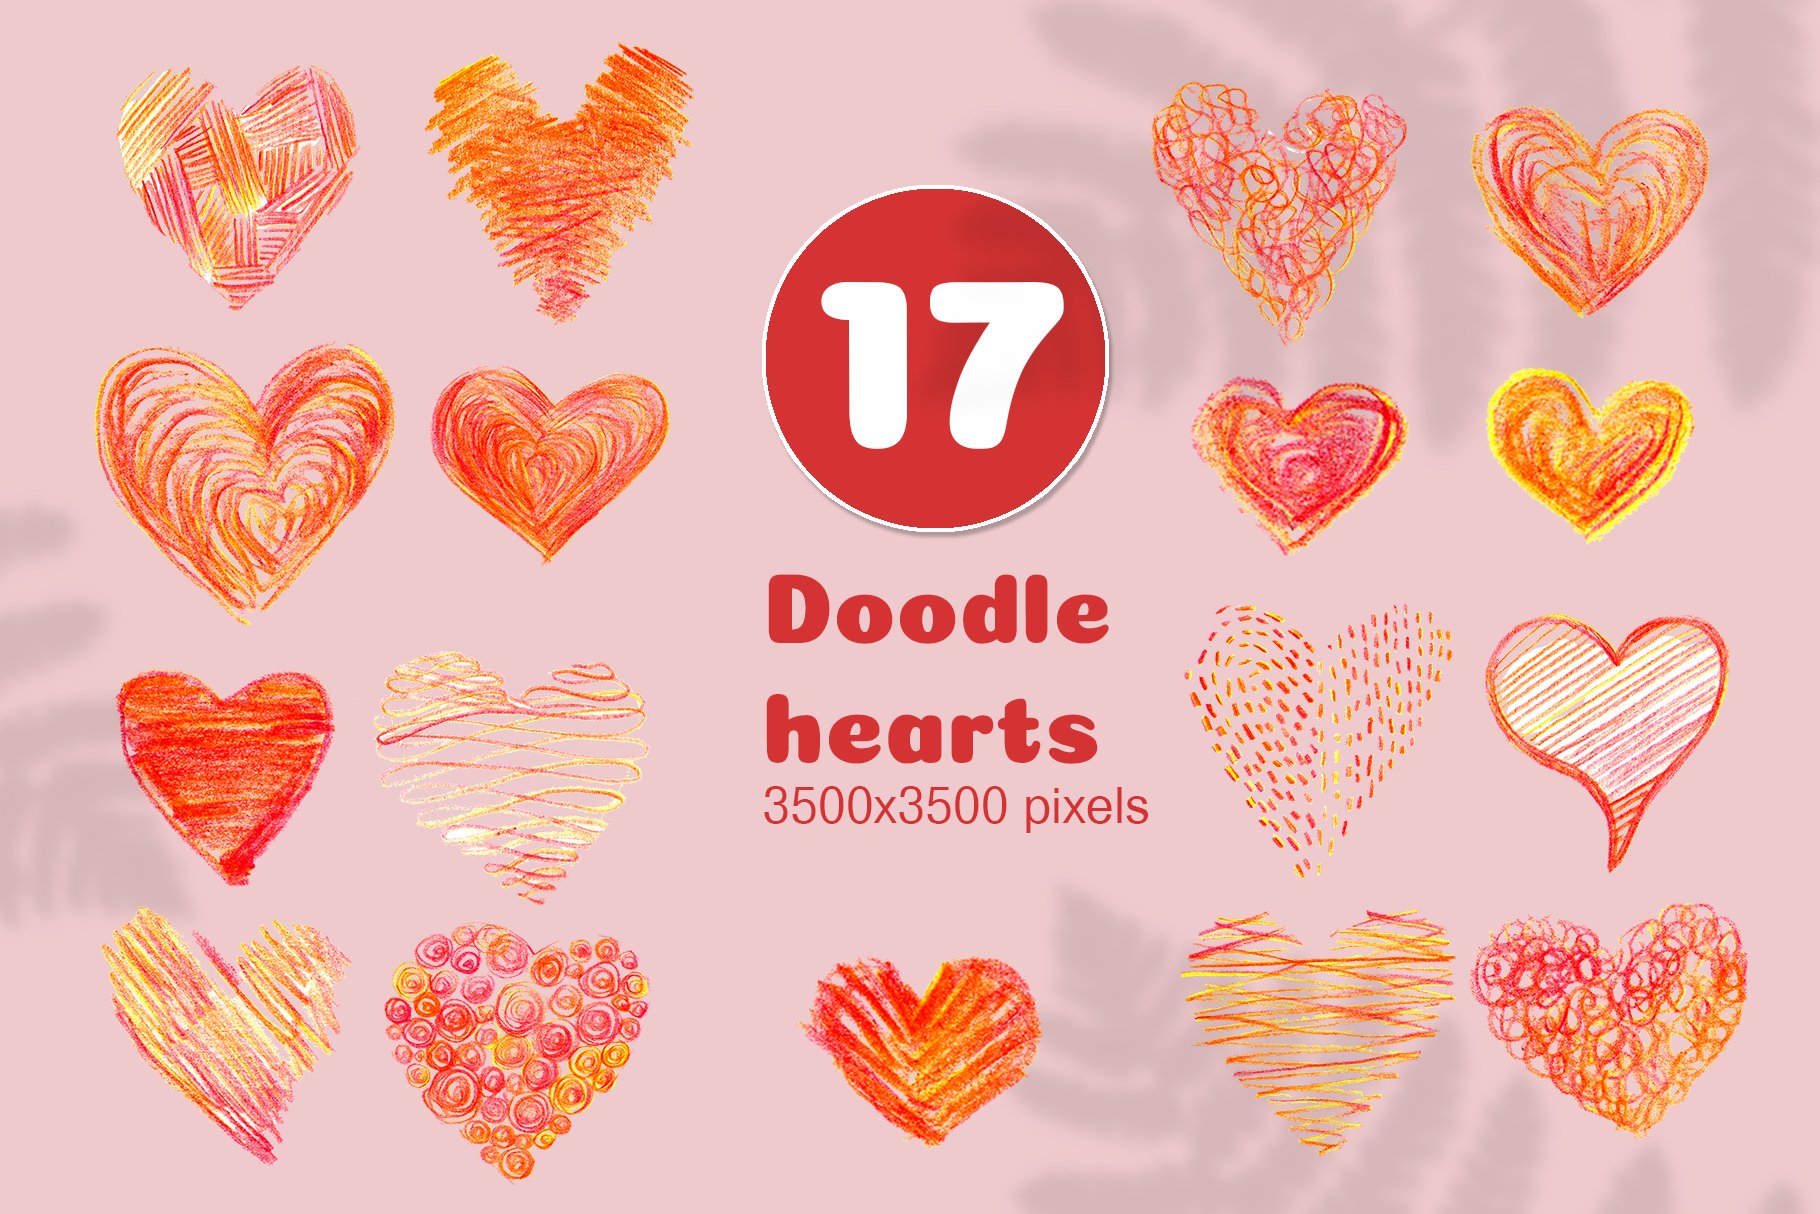 Pencil doodle hearts preview image.